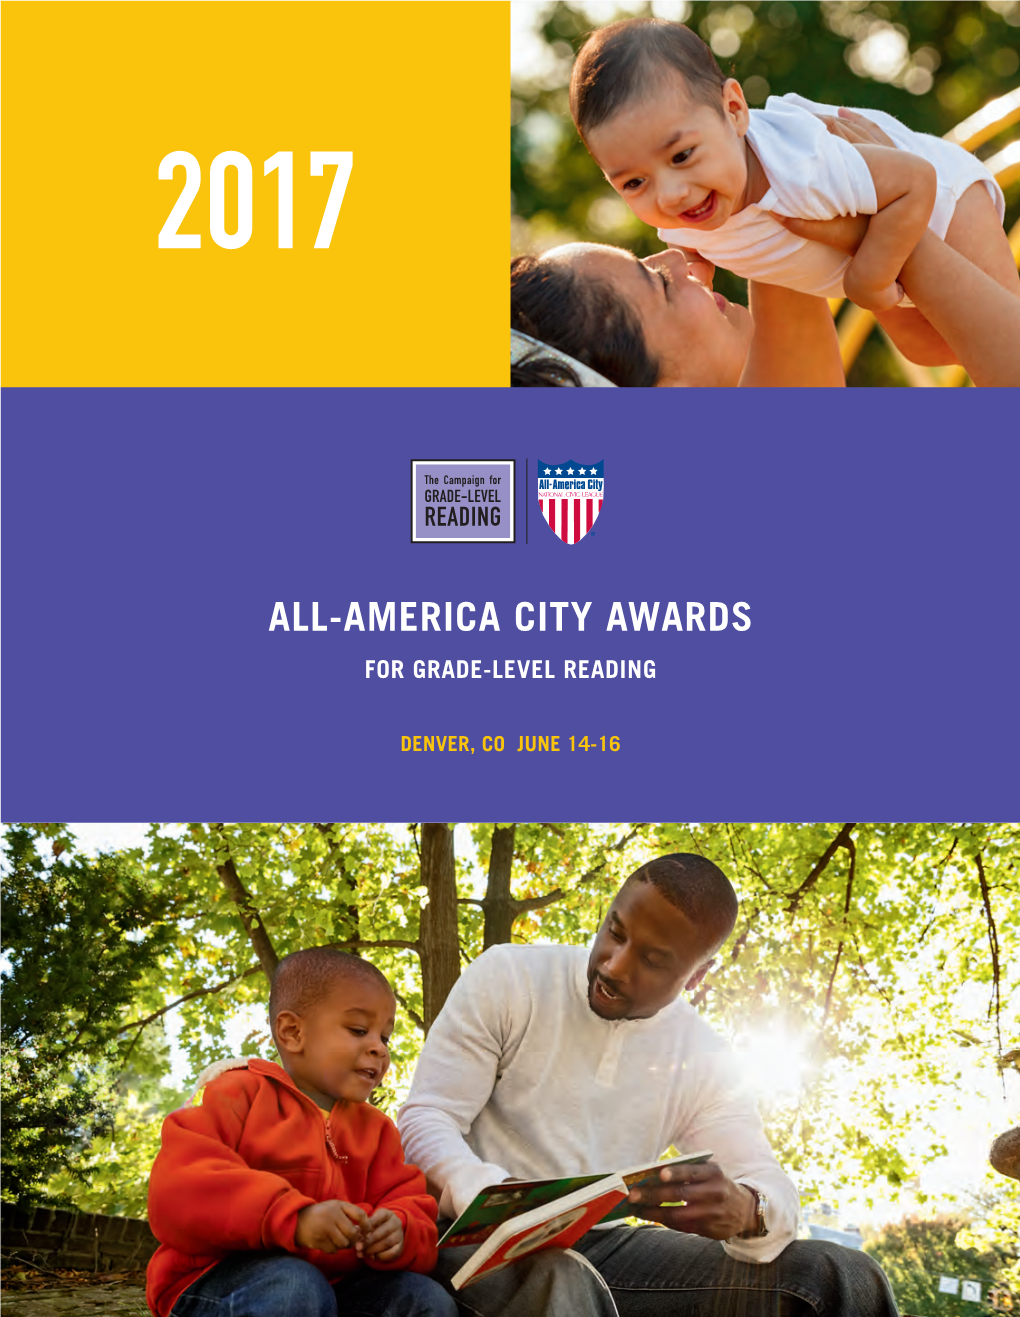 All-America City Awards for Grade-Level Reading